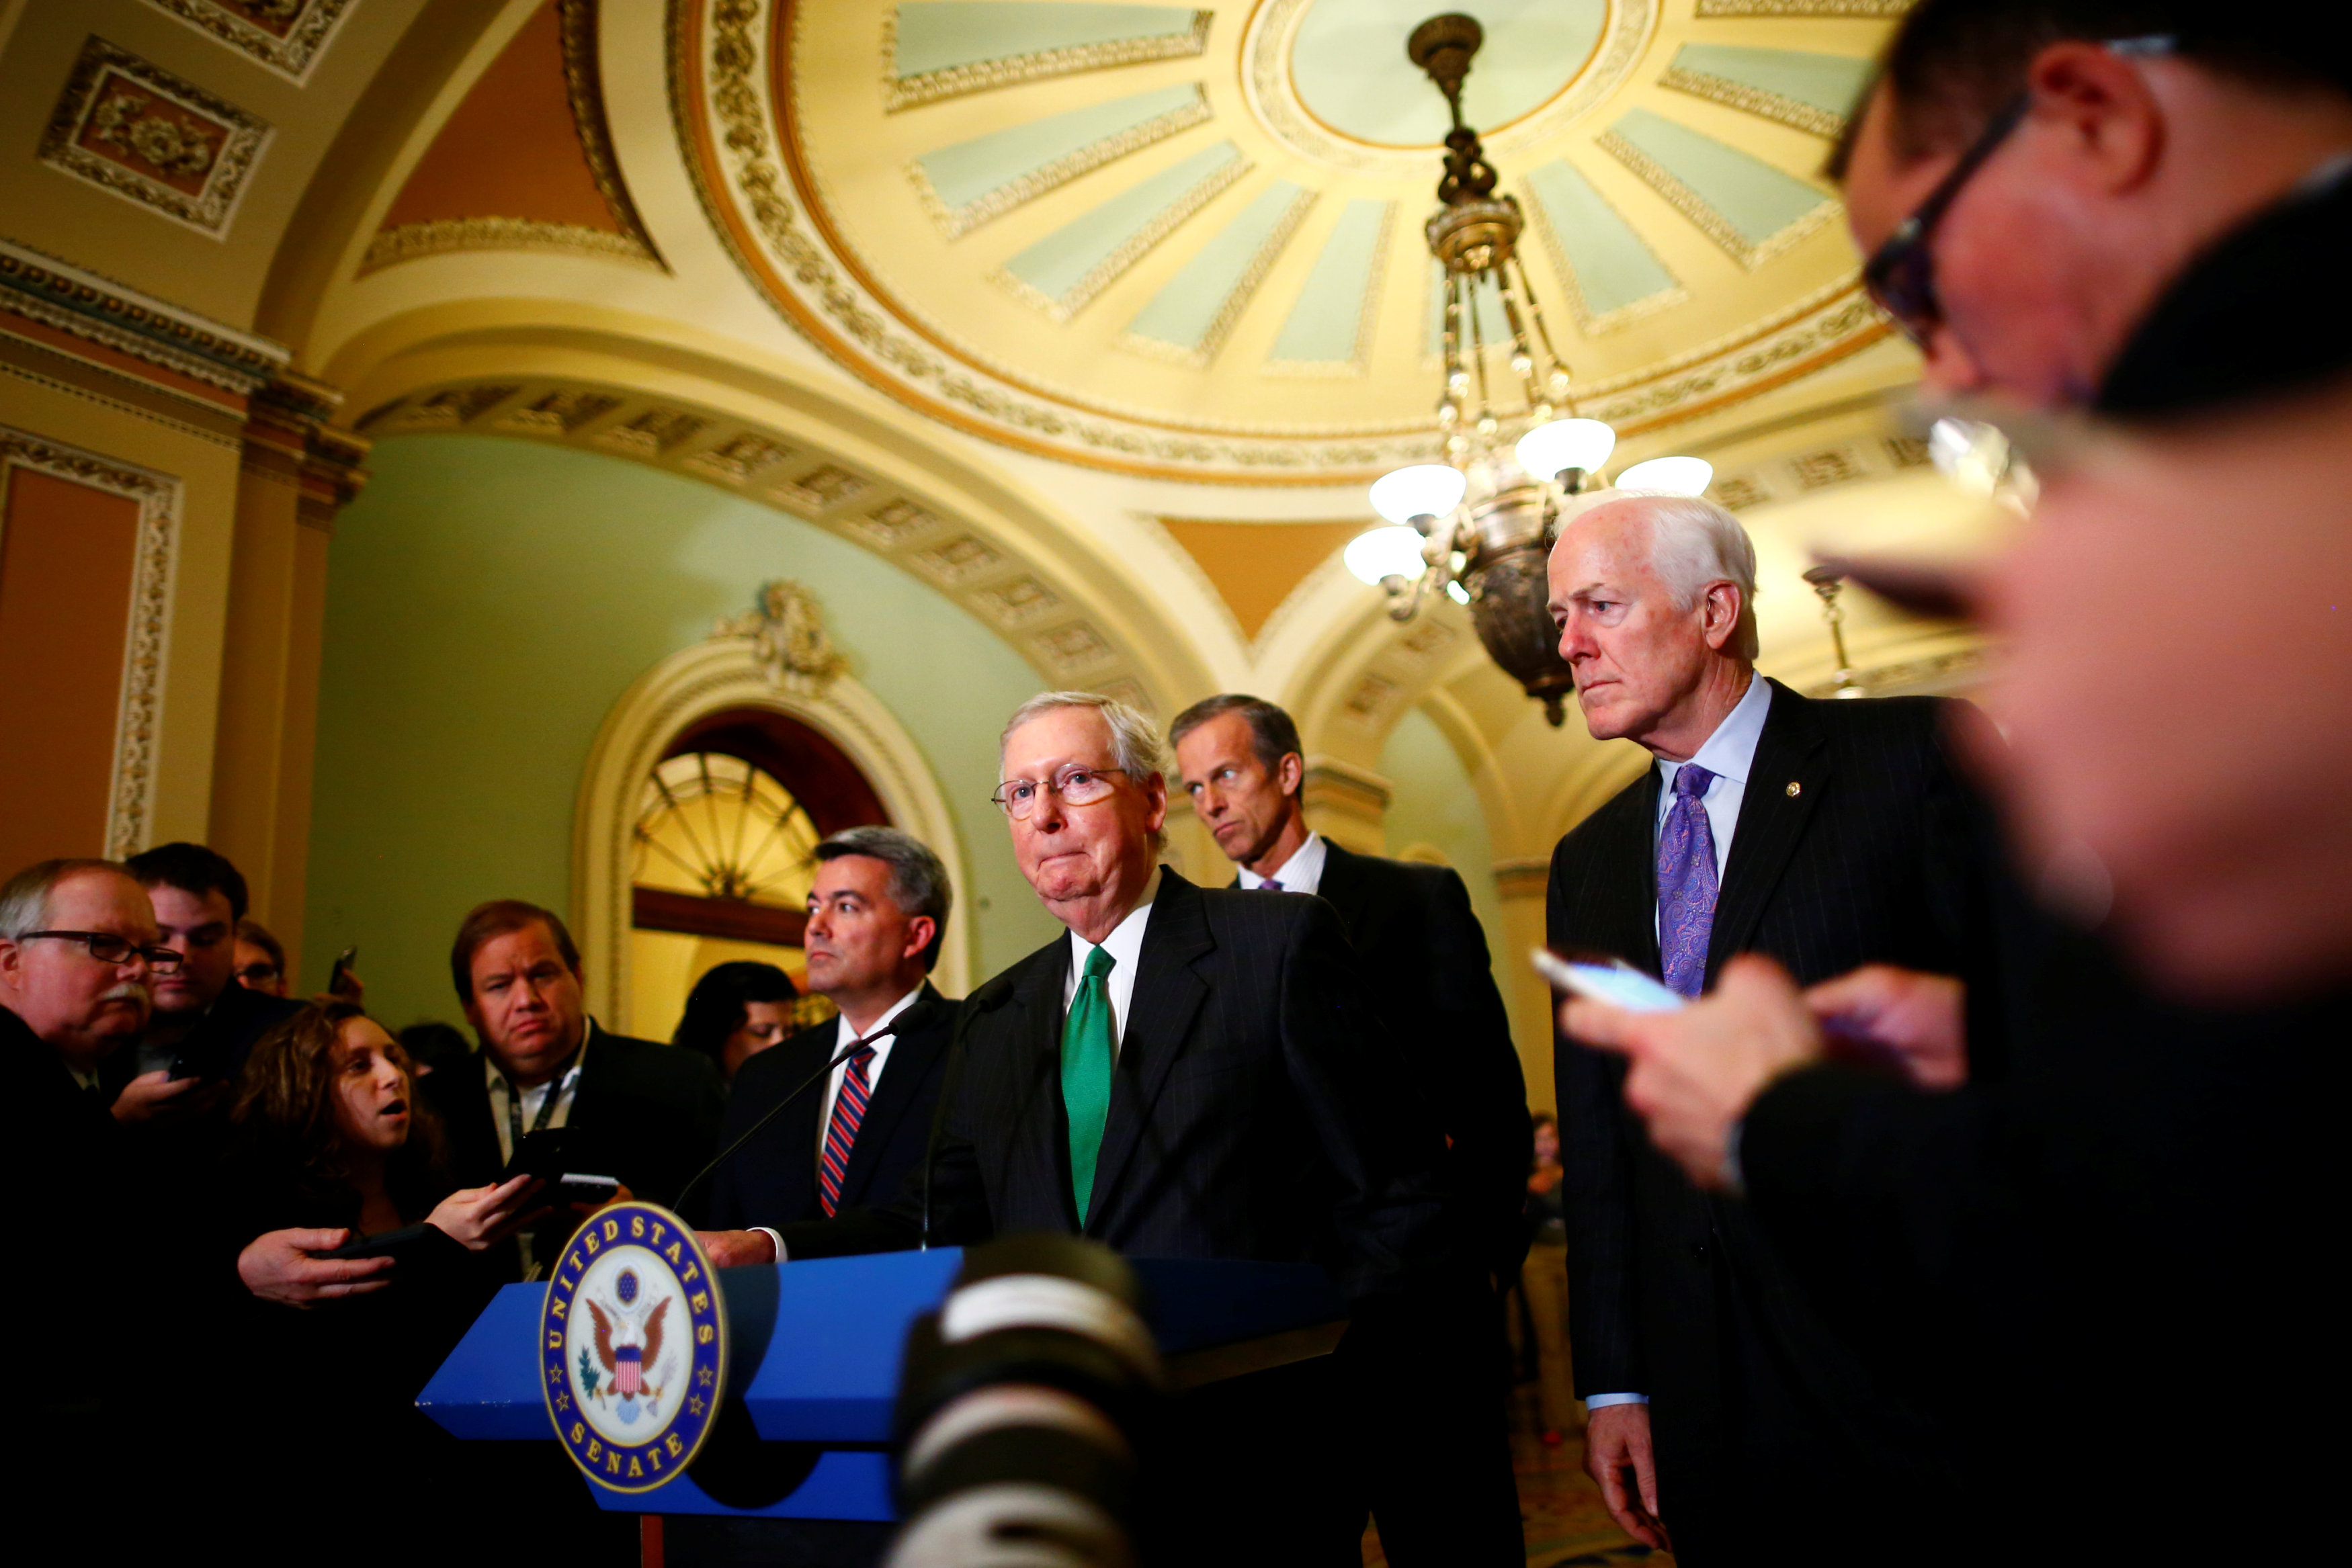 Top U.S. Senate Republican aims for tax bill by year-end